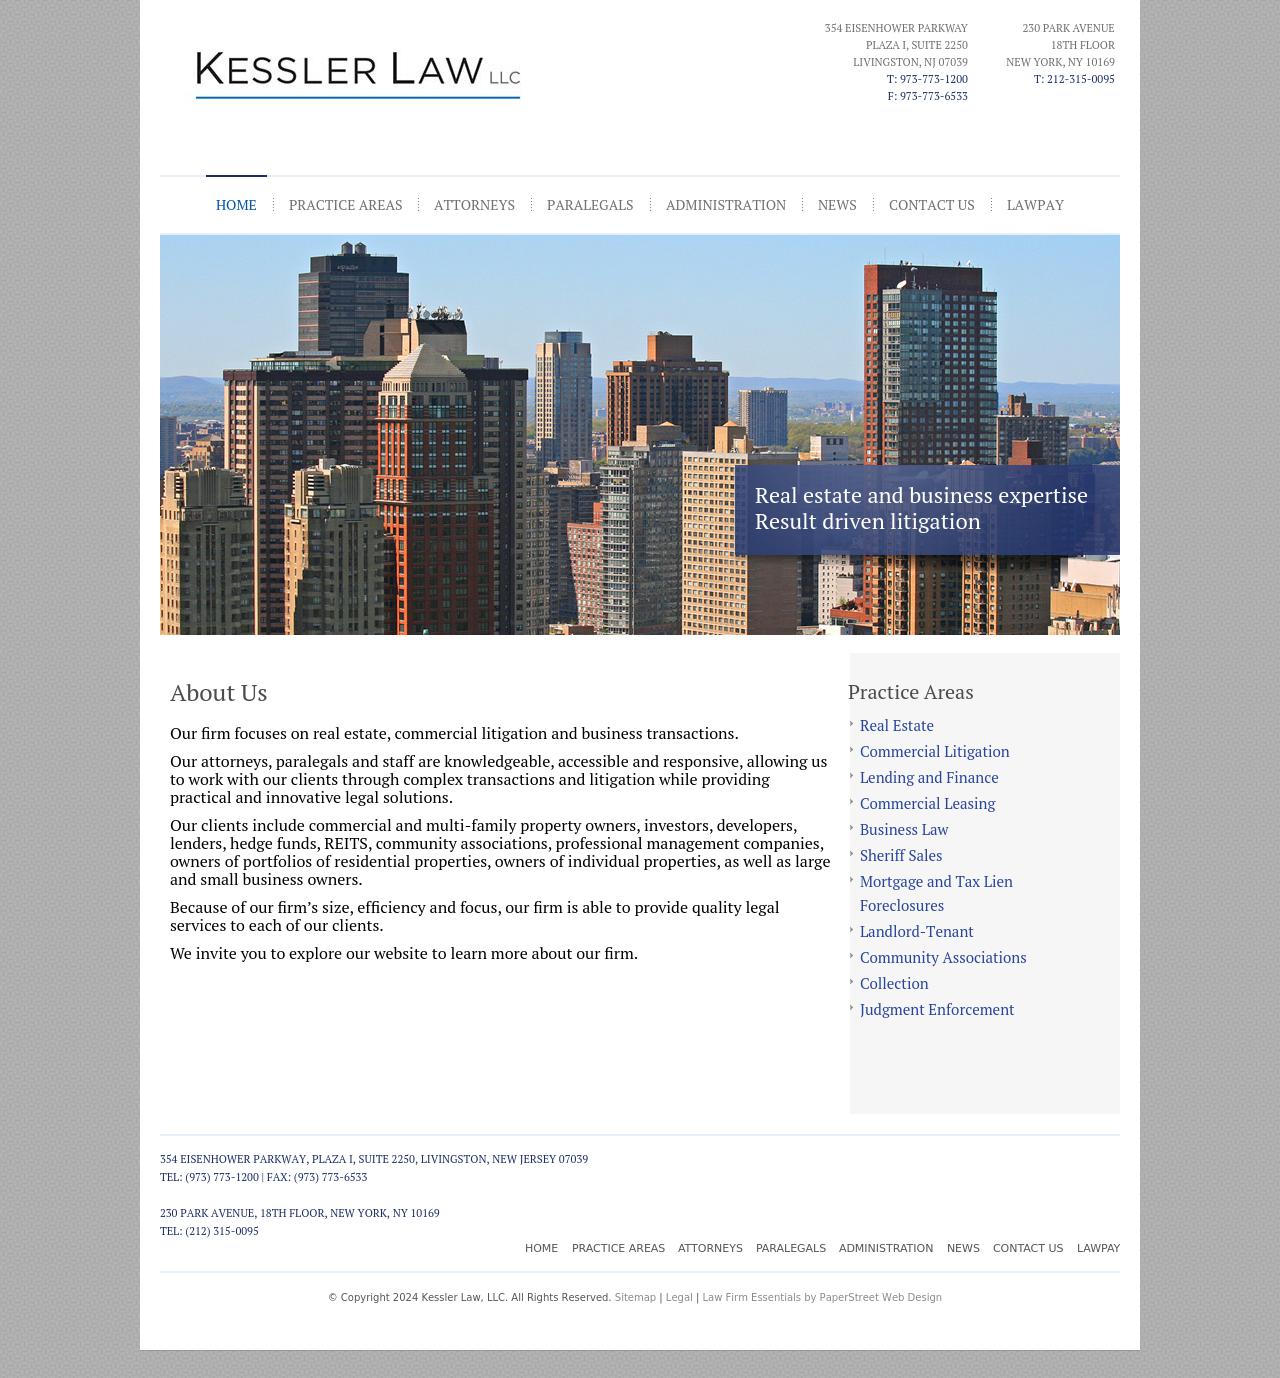 David Kessler & Associates, L.L.C. - Clifton NJ Lawyers